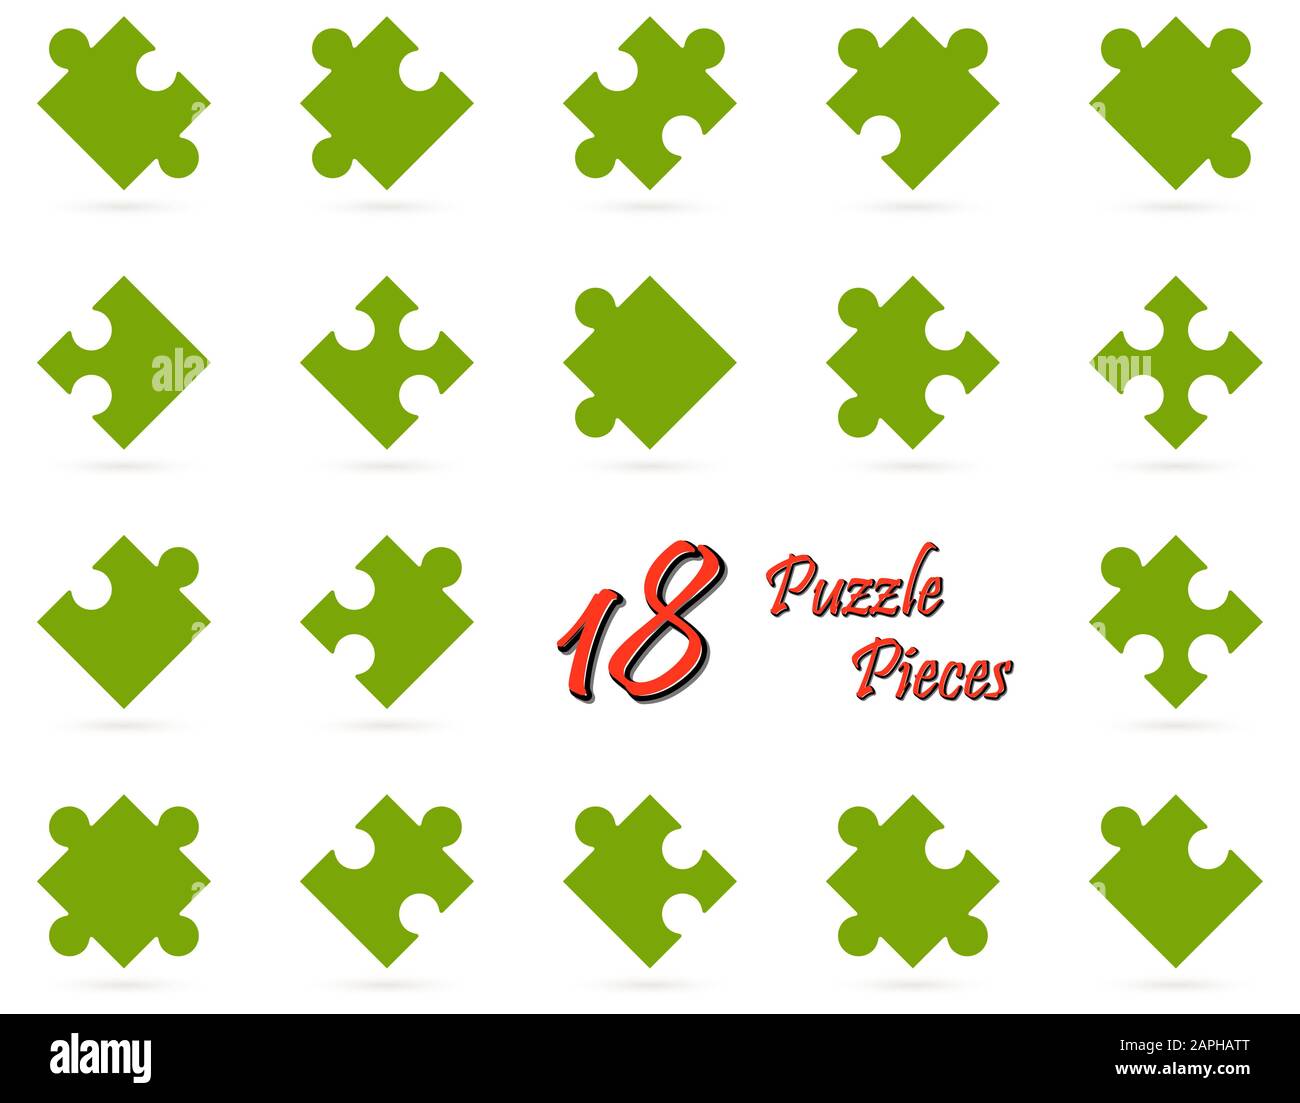 Sammlung aller 18 Puzzleteile in grüner Farbe Stock Vektor